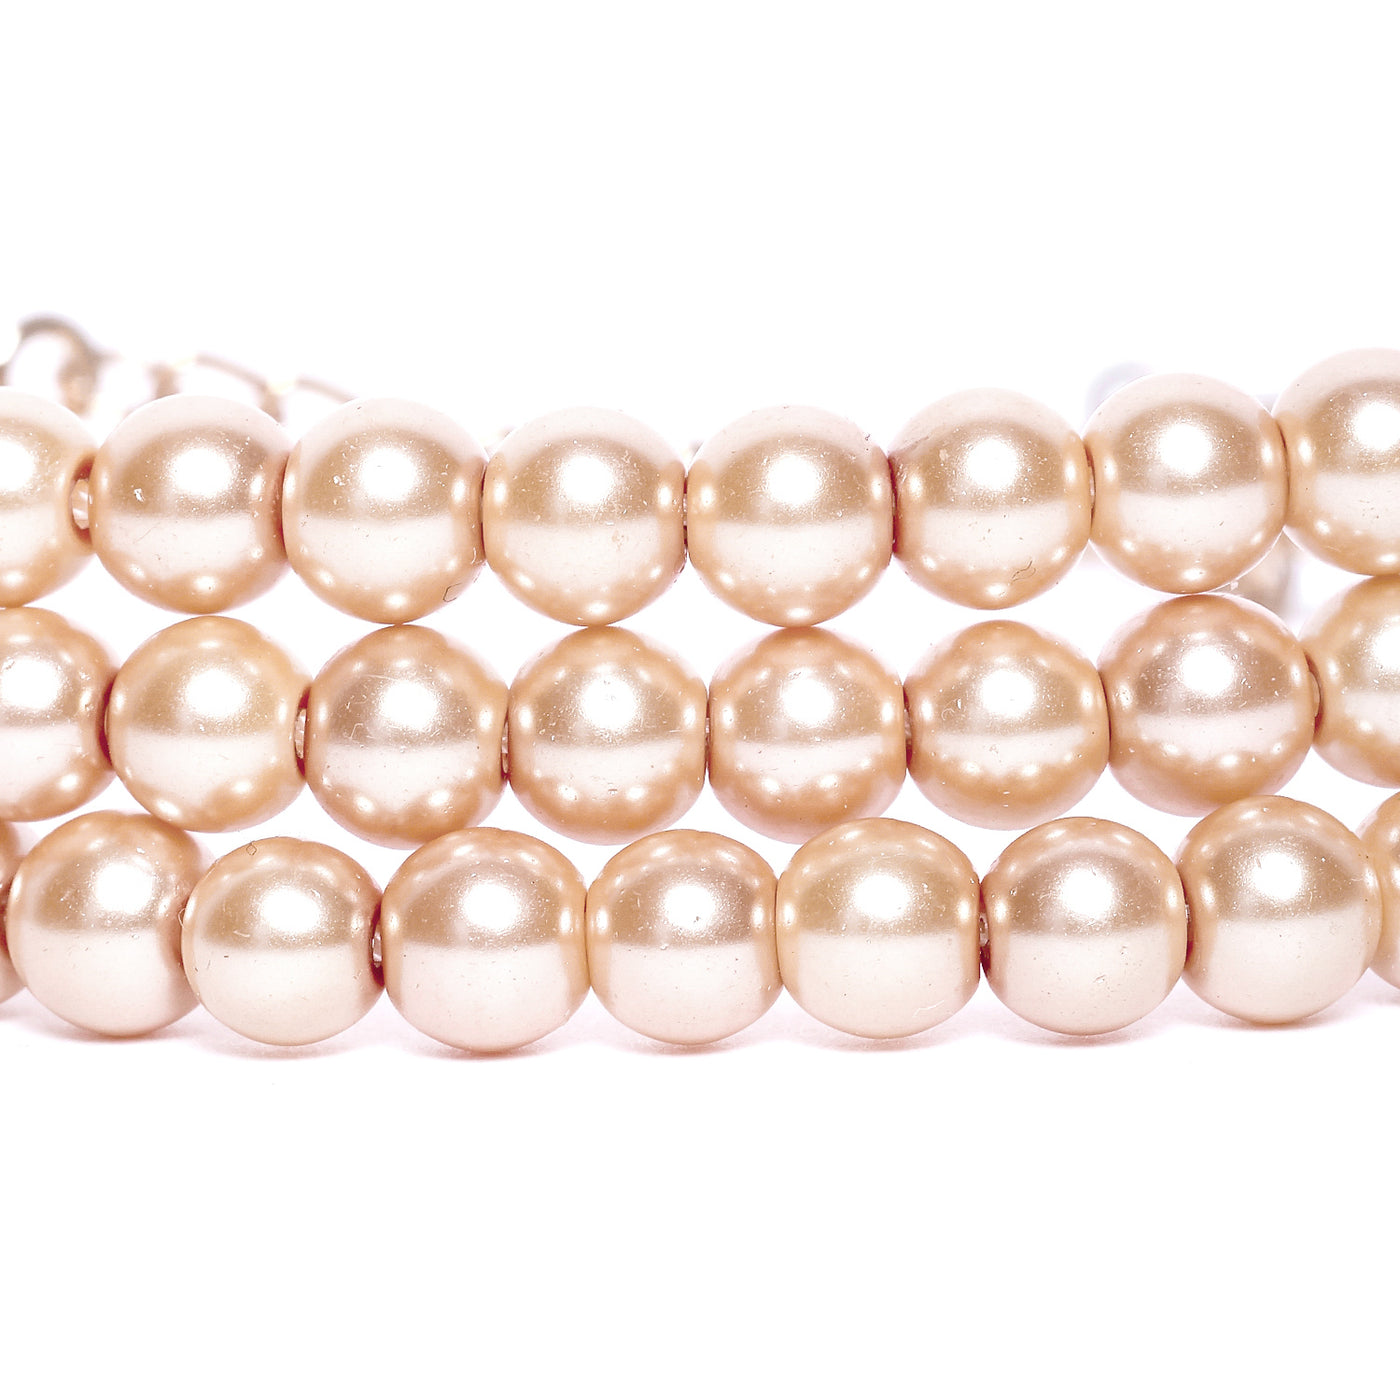 Estele - Cream Pearl Three Line Bracelet